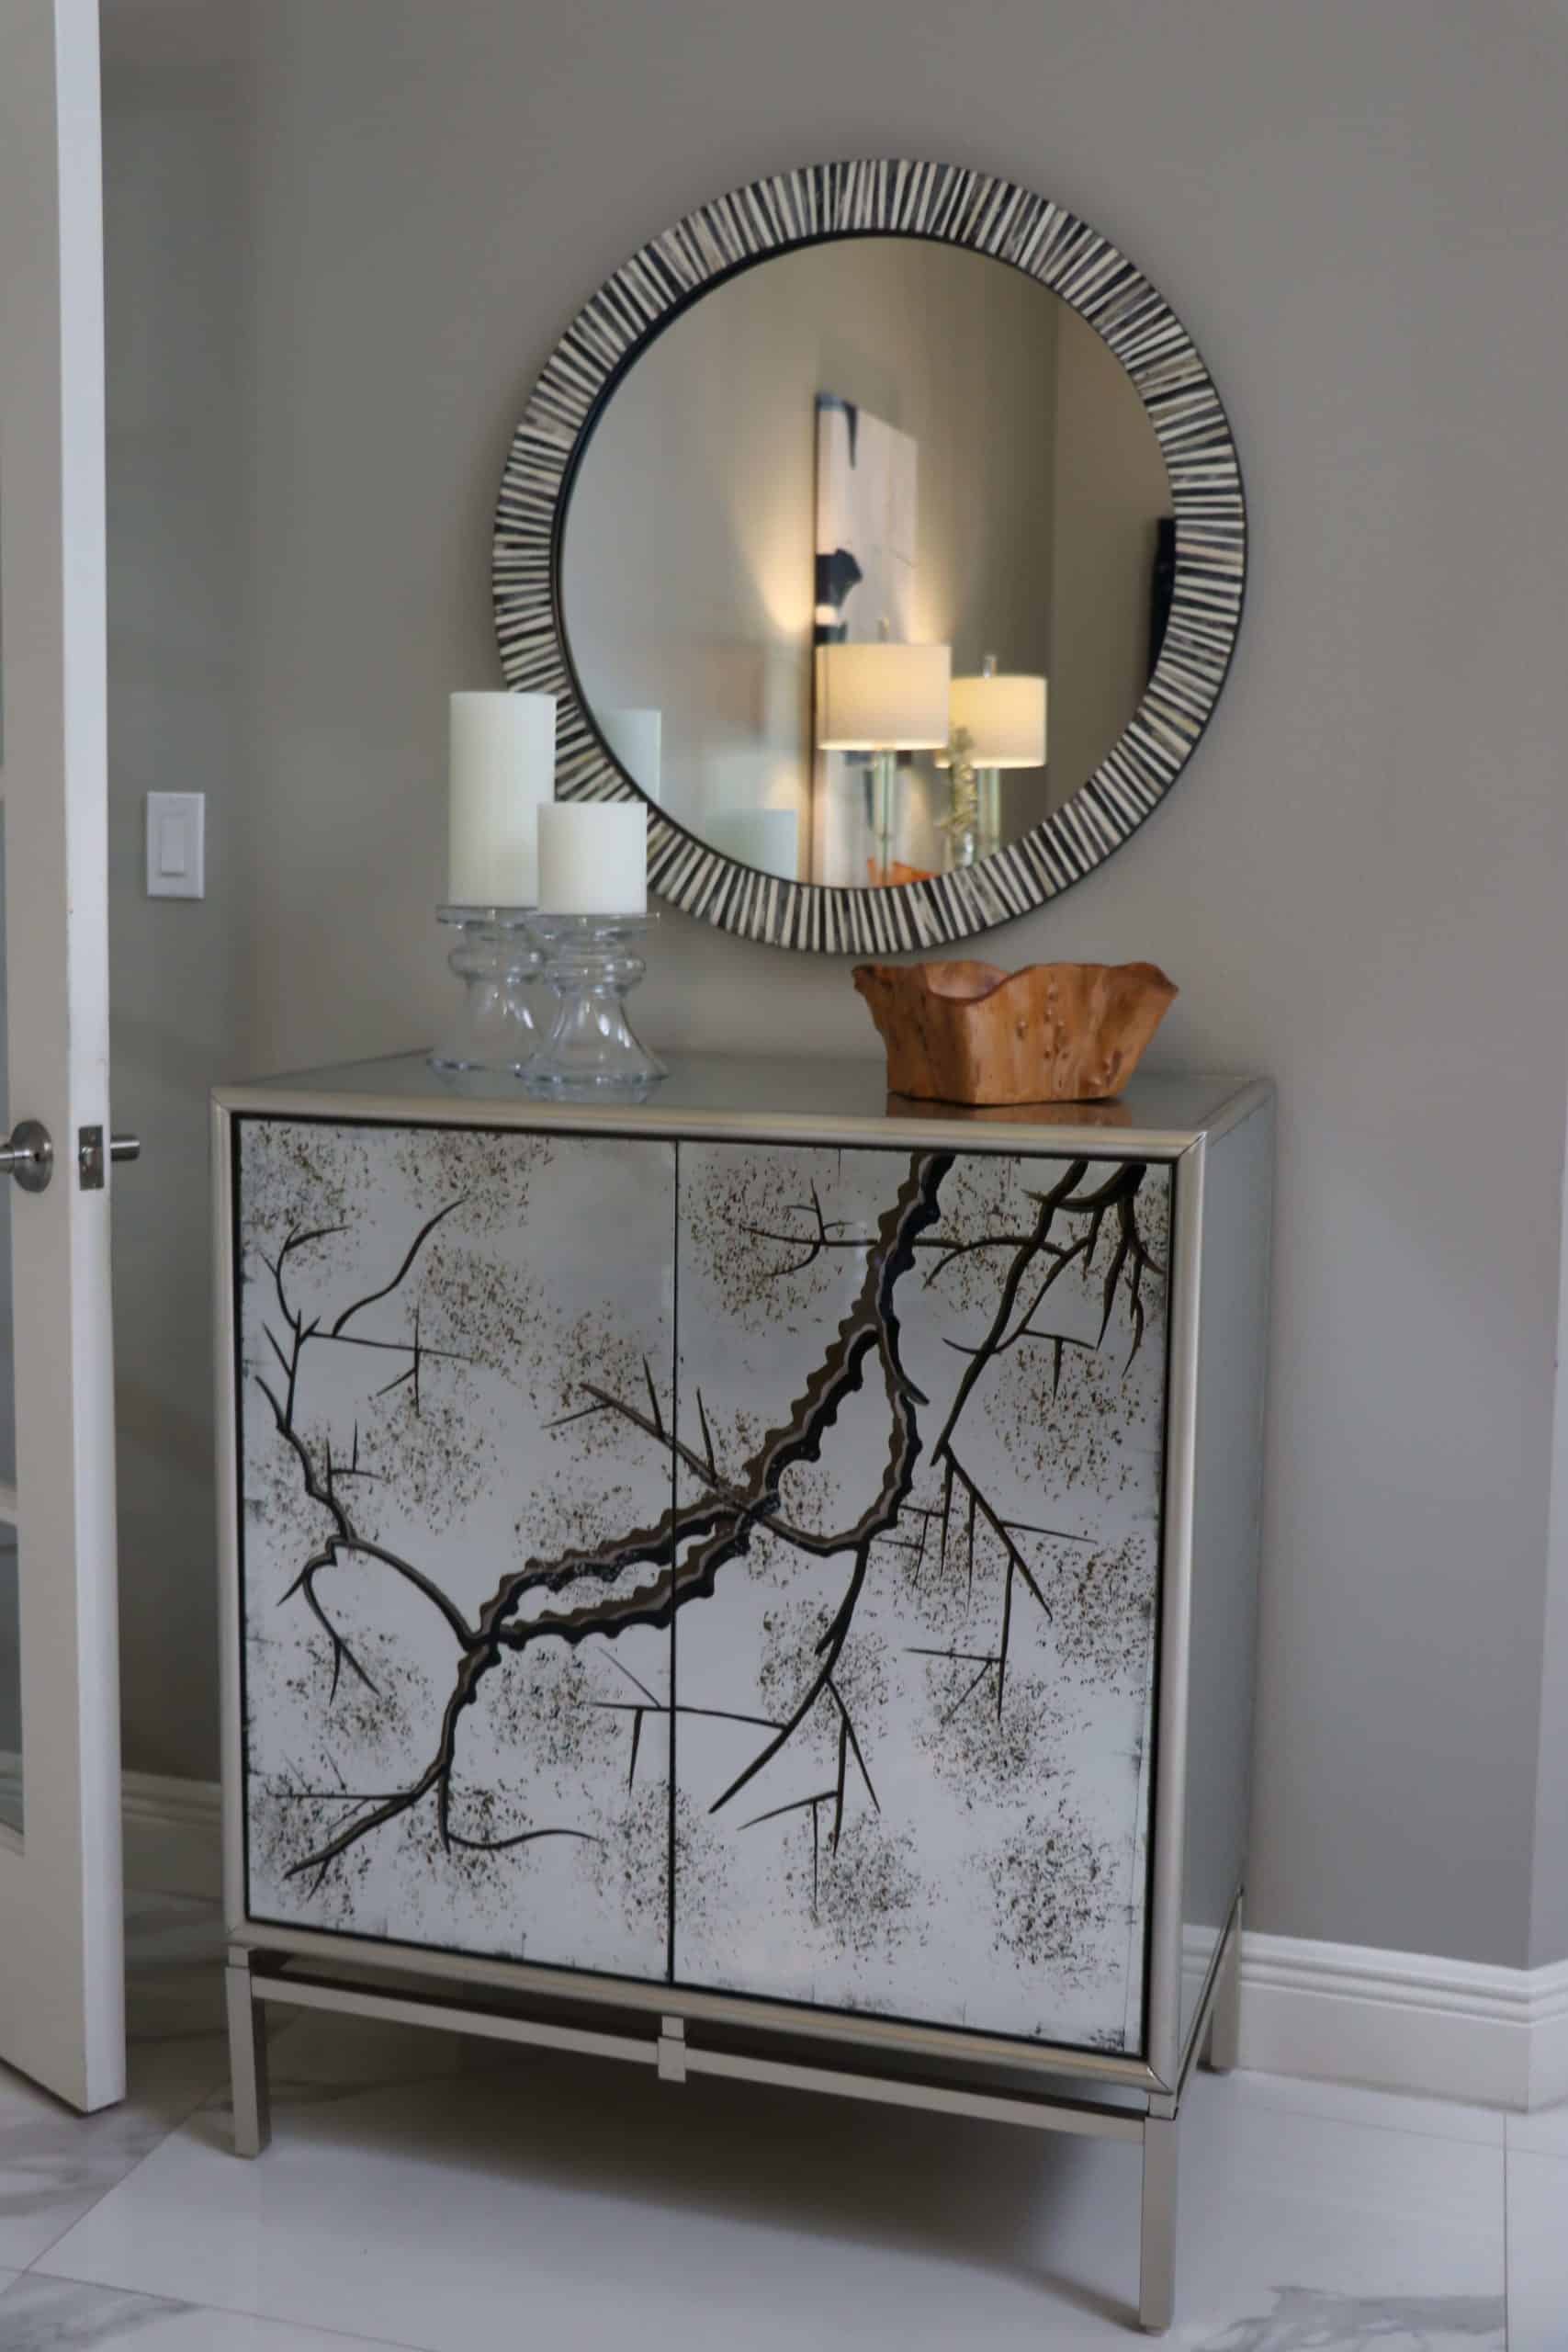 Custom cabinet with an elegant design next below a circular mirror